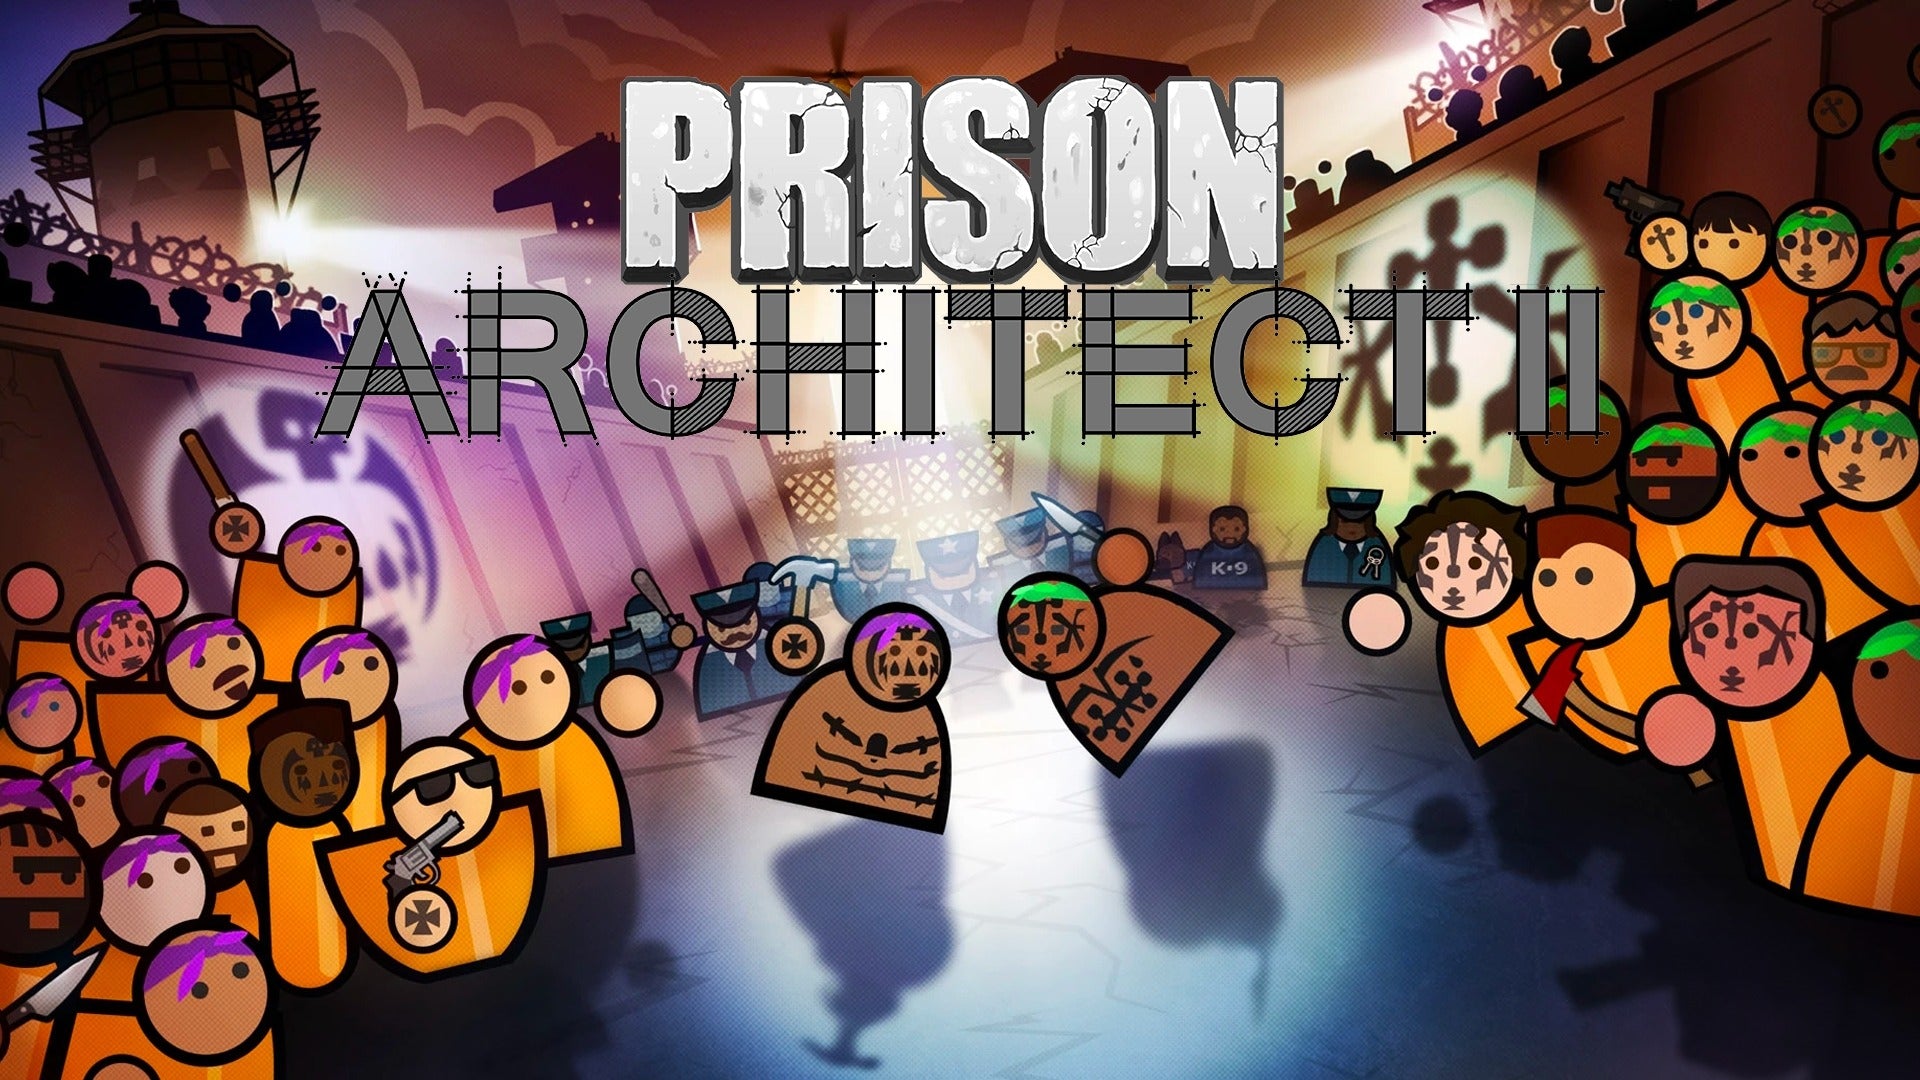 Prison Architect 2 (Standard Edition) - למחשב